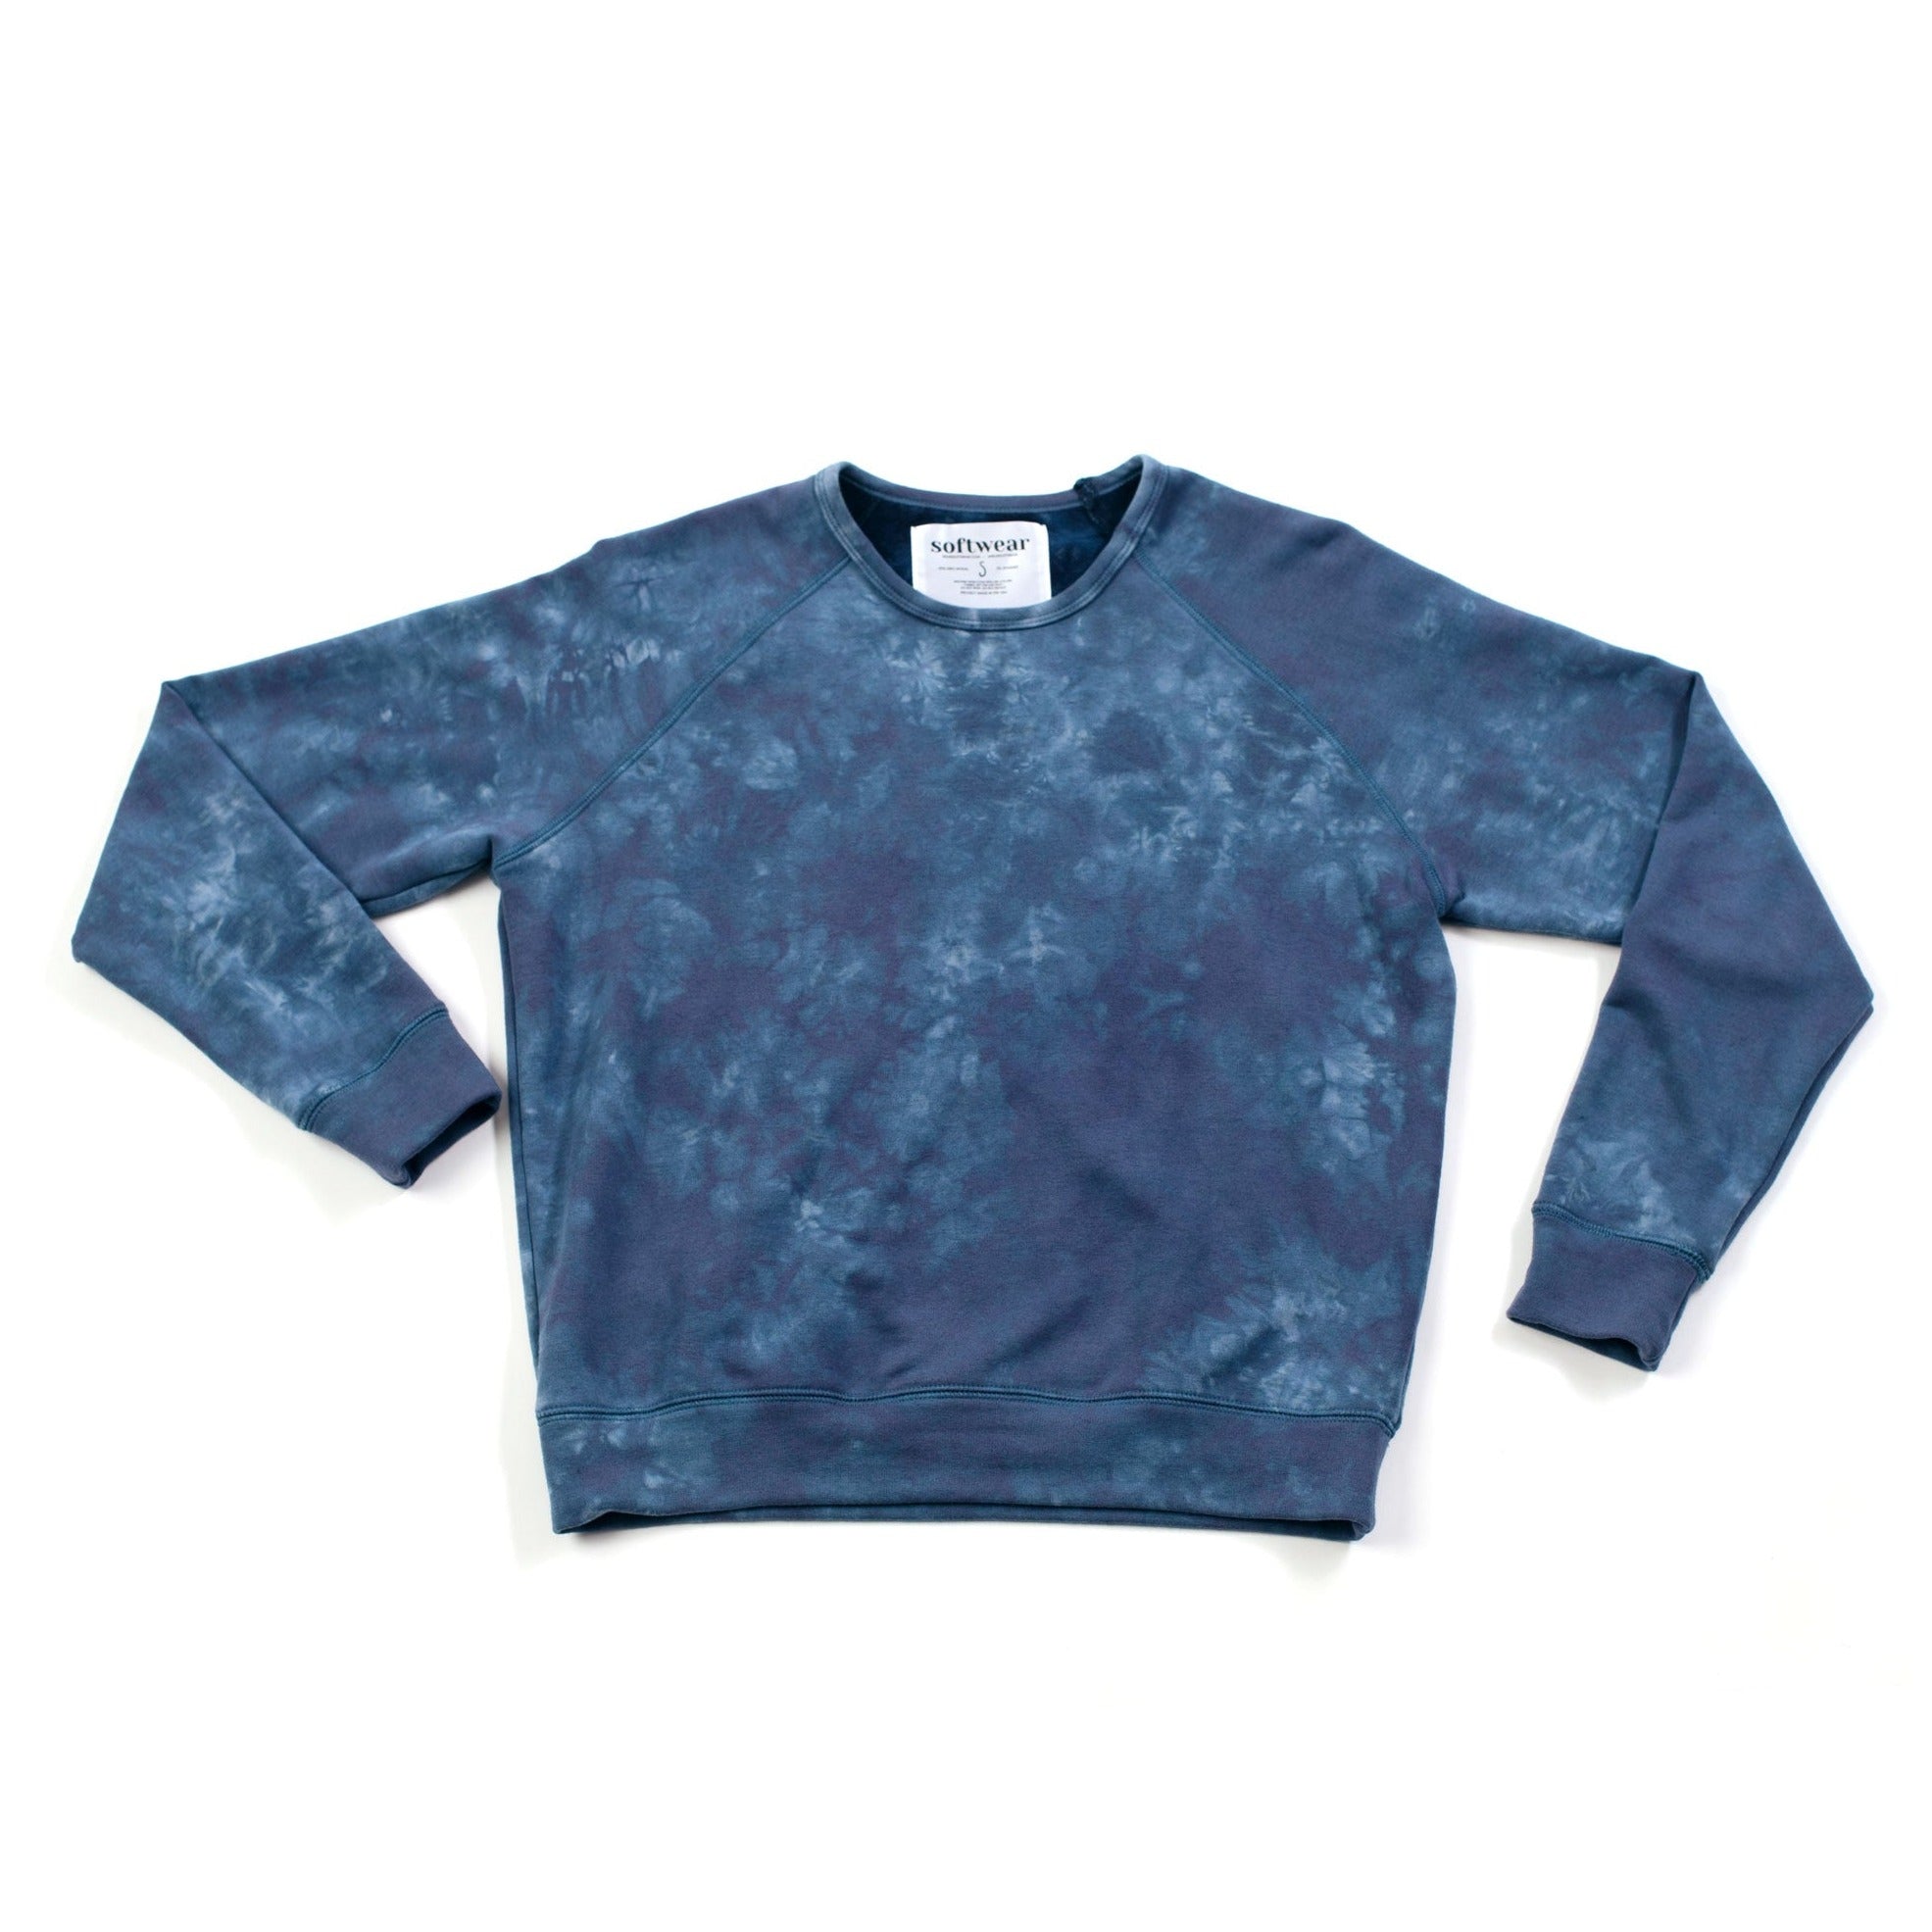 JR Workwear X softwear Crewneck Soft Sweatshirt, Blue Soft Sweatshirt